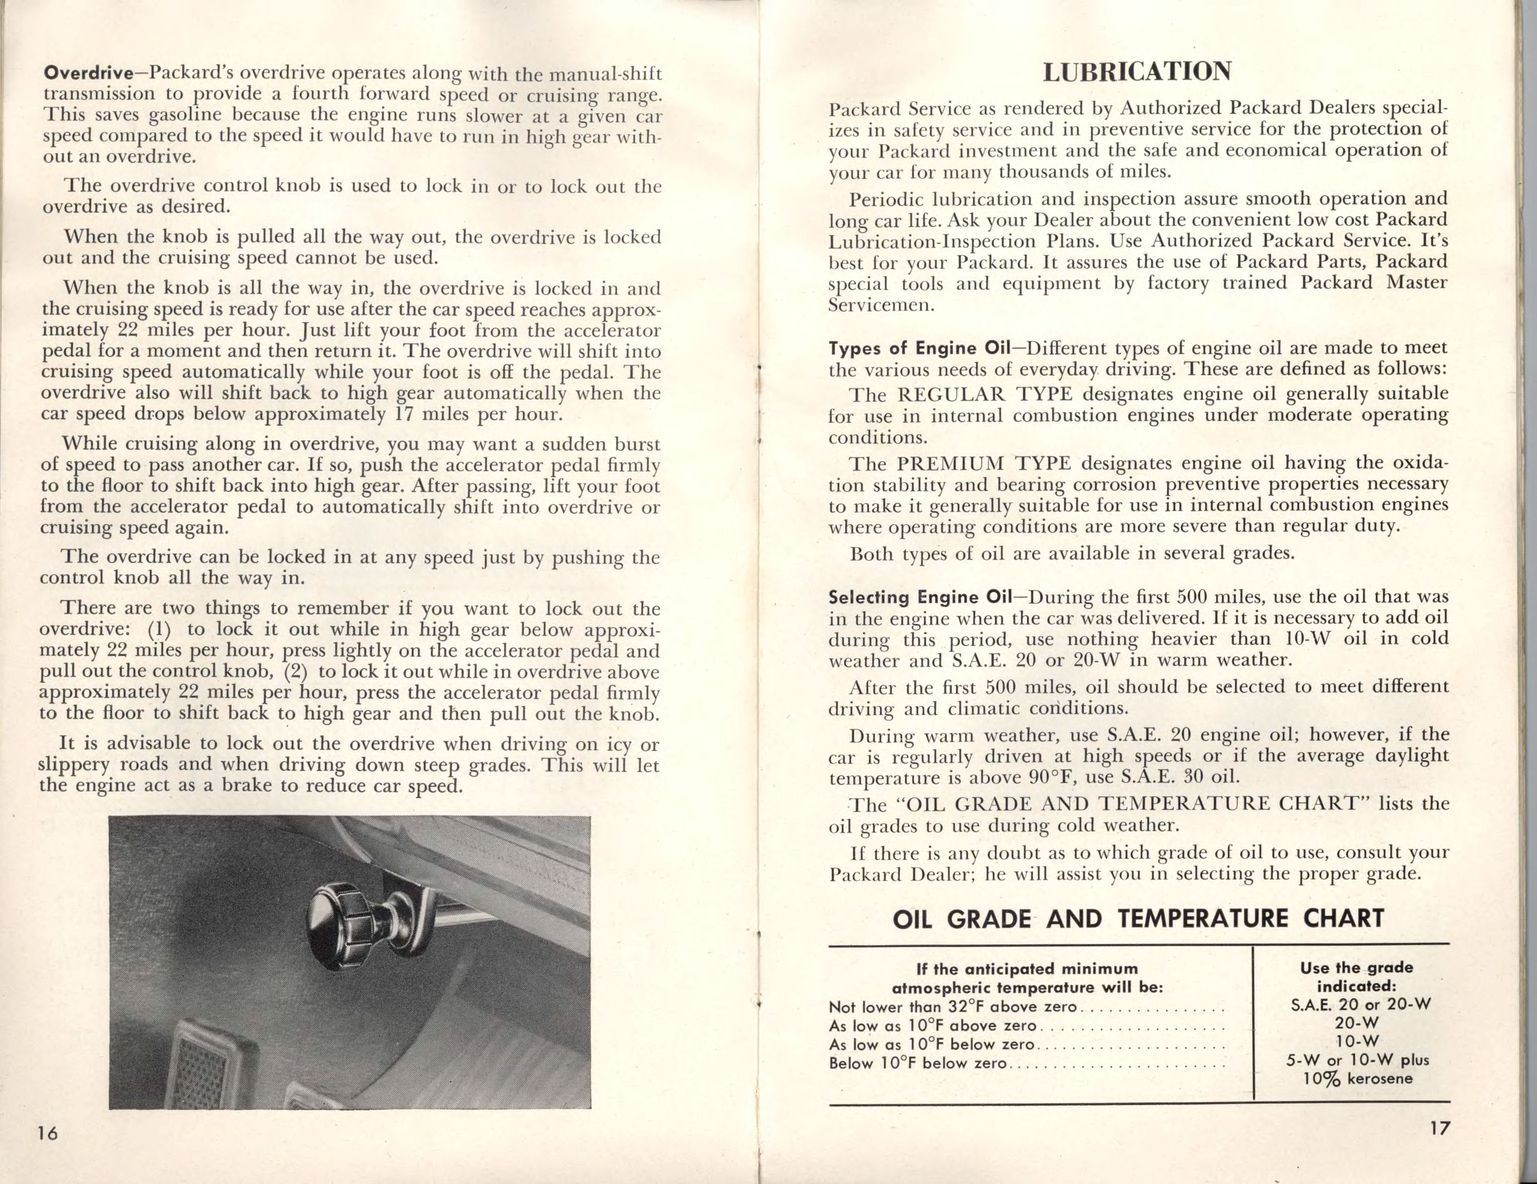 1951 Packard Manual-16-17